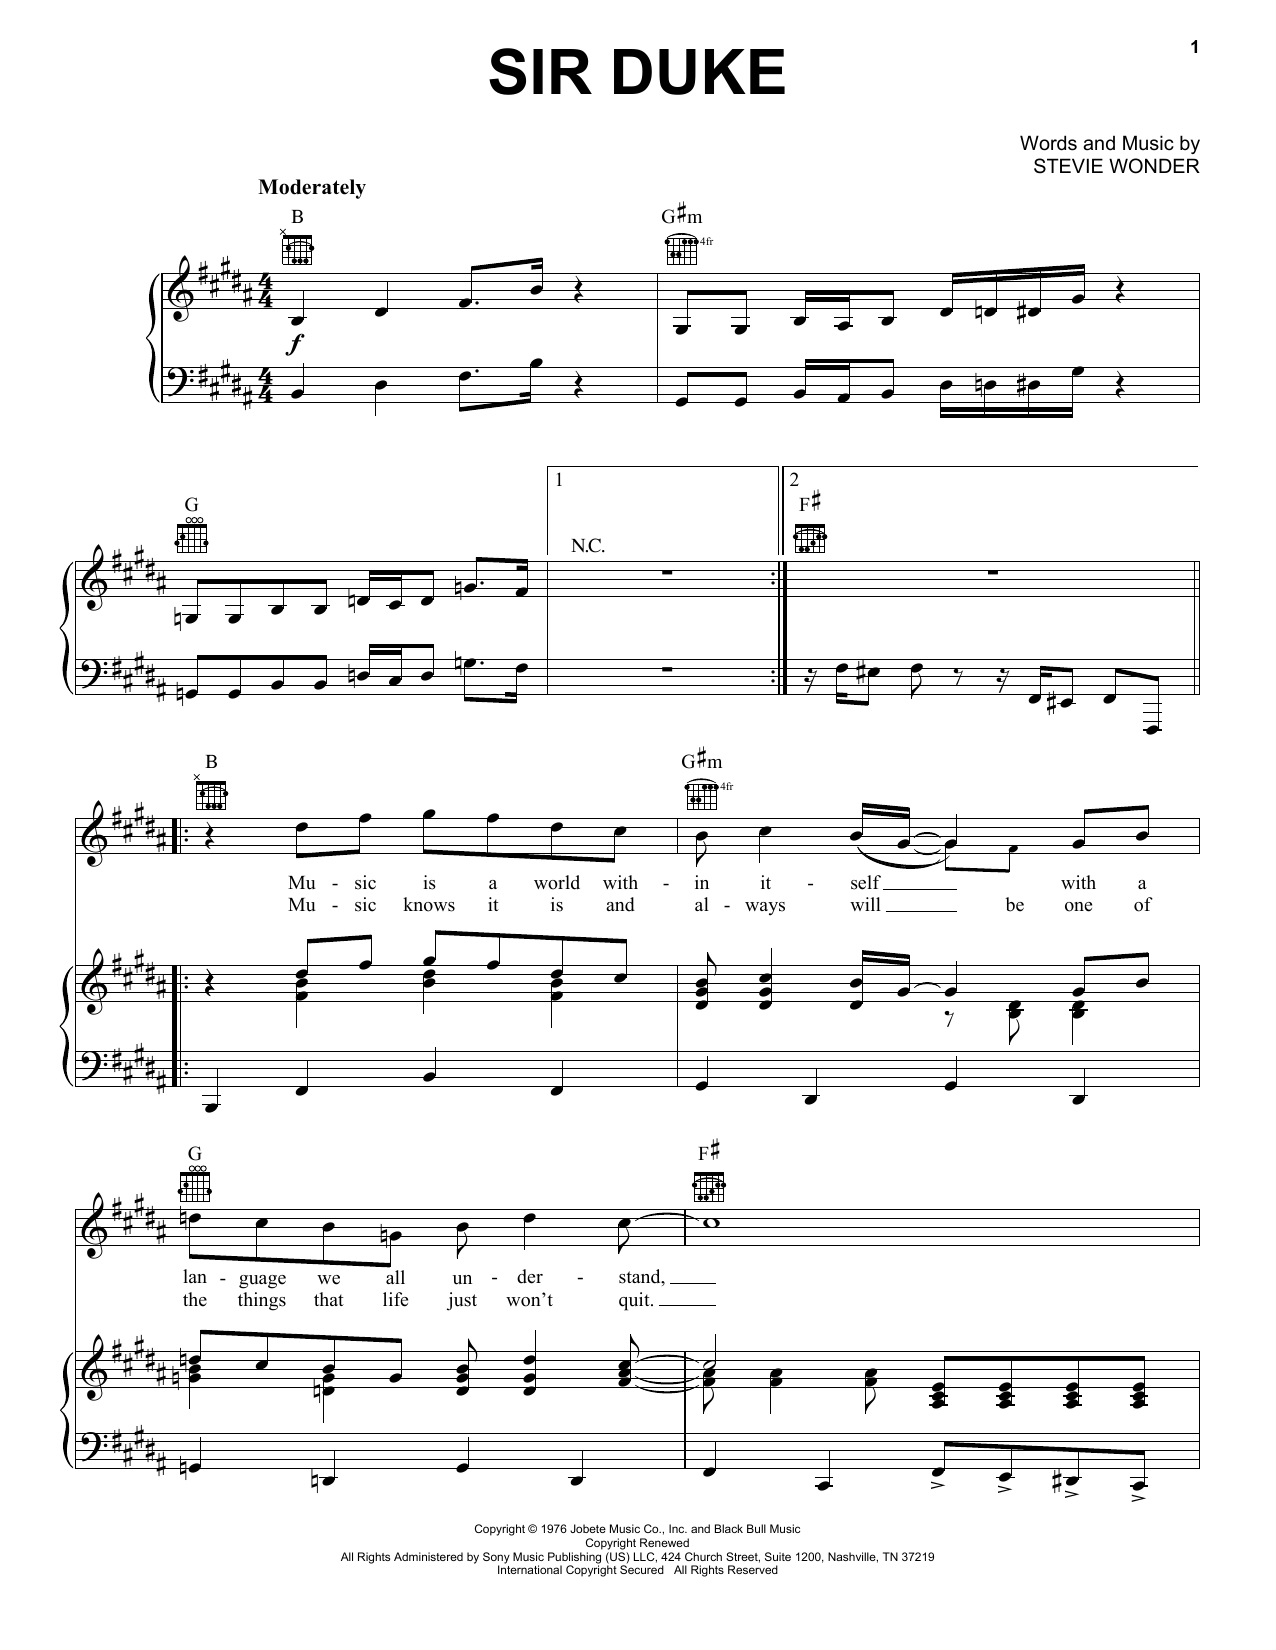 Stevie Wonder Sir Duke Sheet Music Notes & Chords for Bass Guitar Tab - Download or Print PDF